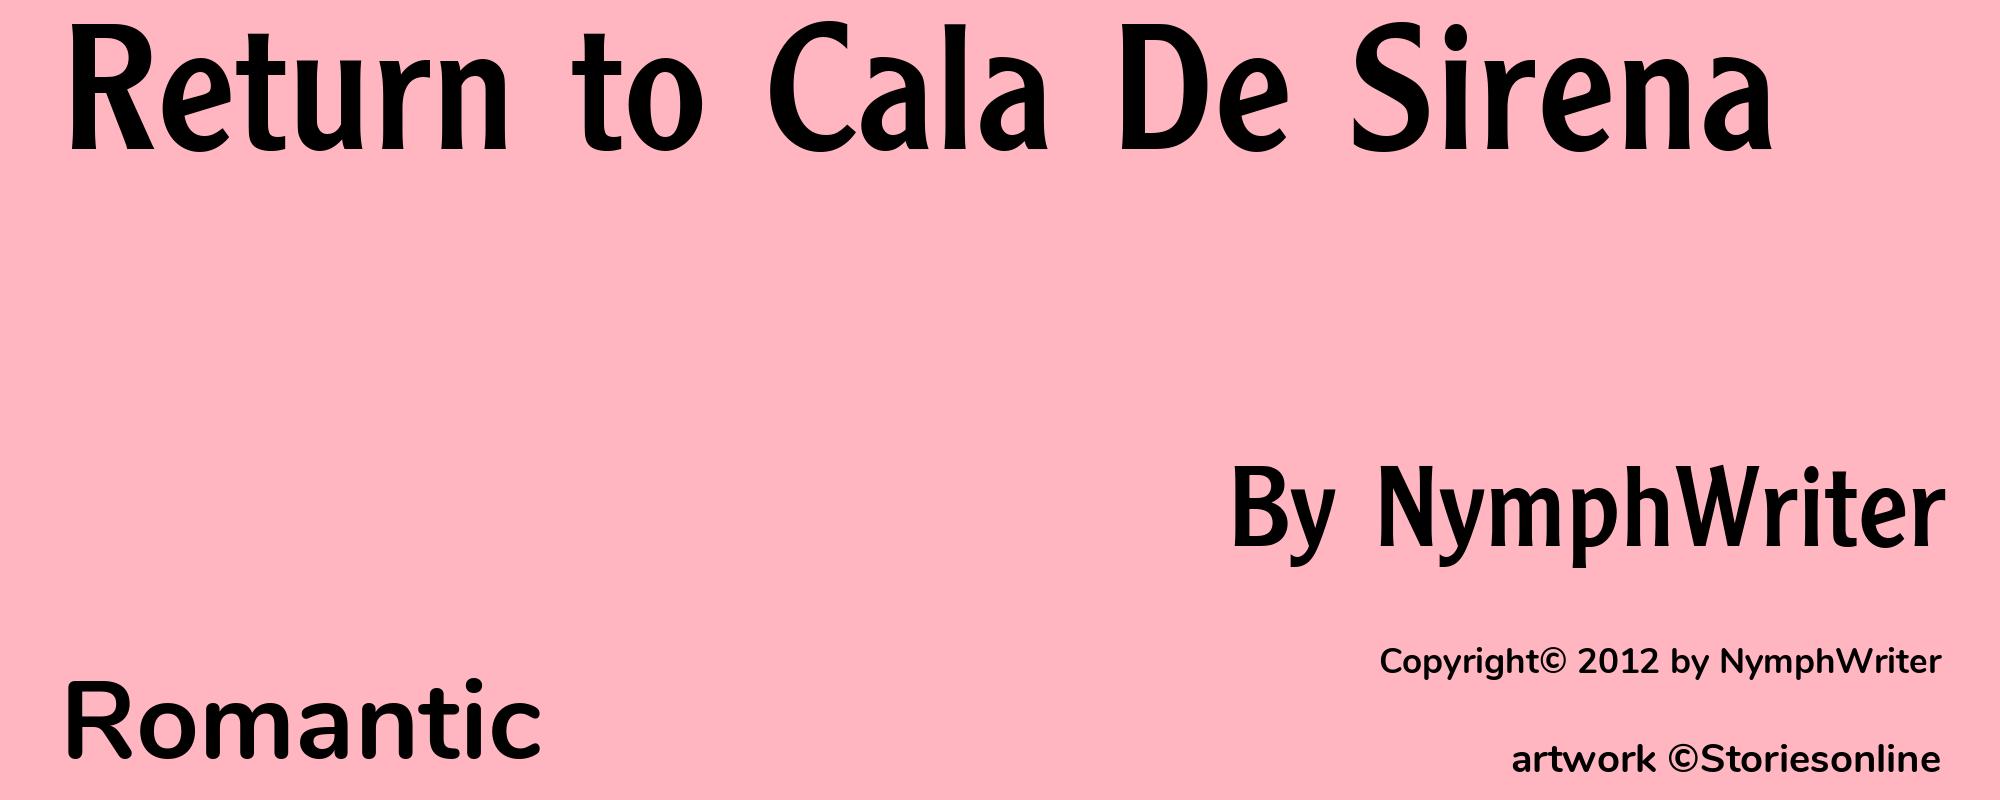 Return to Cala De Sirena - Cover